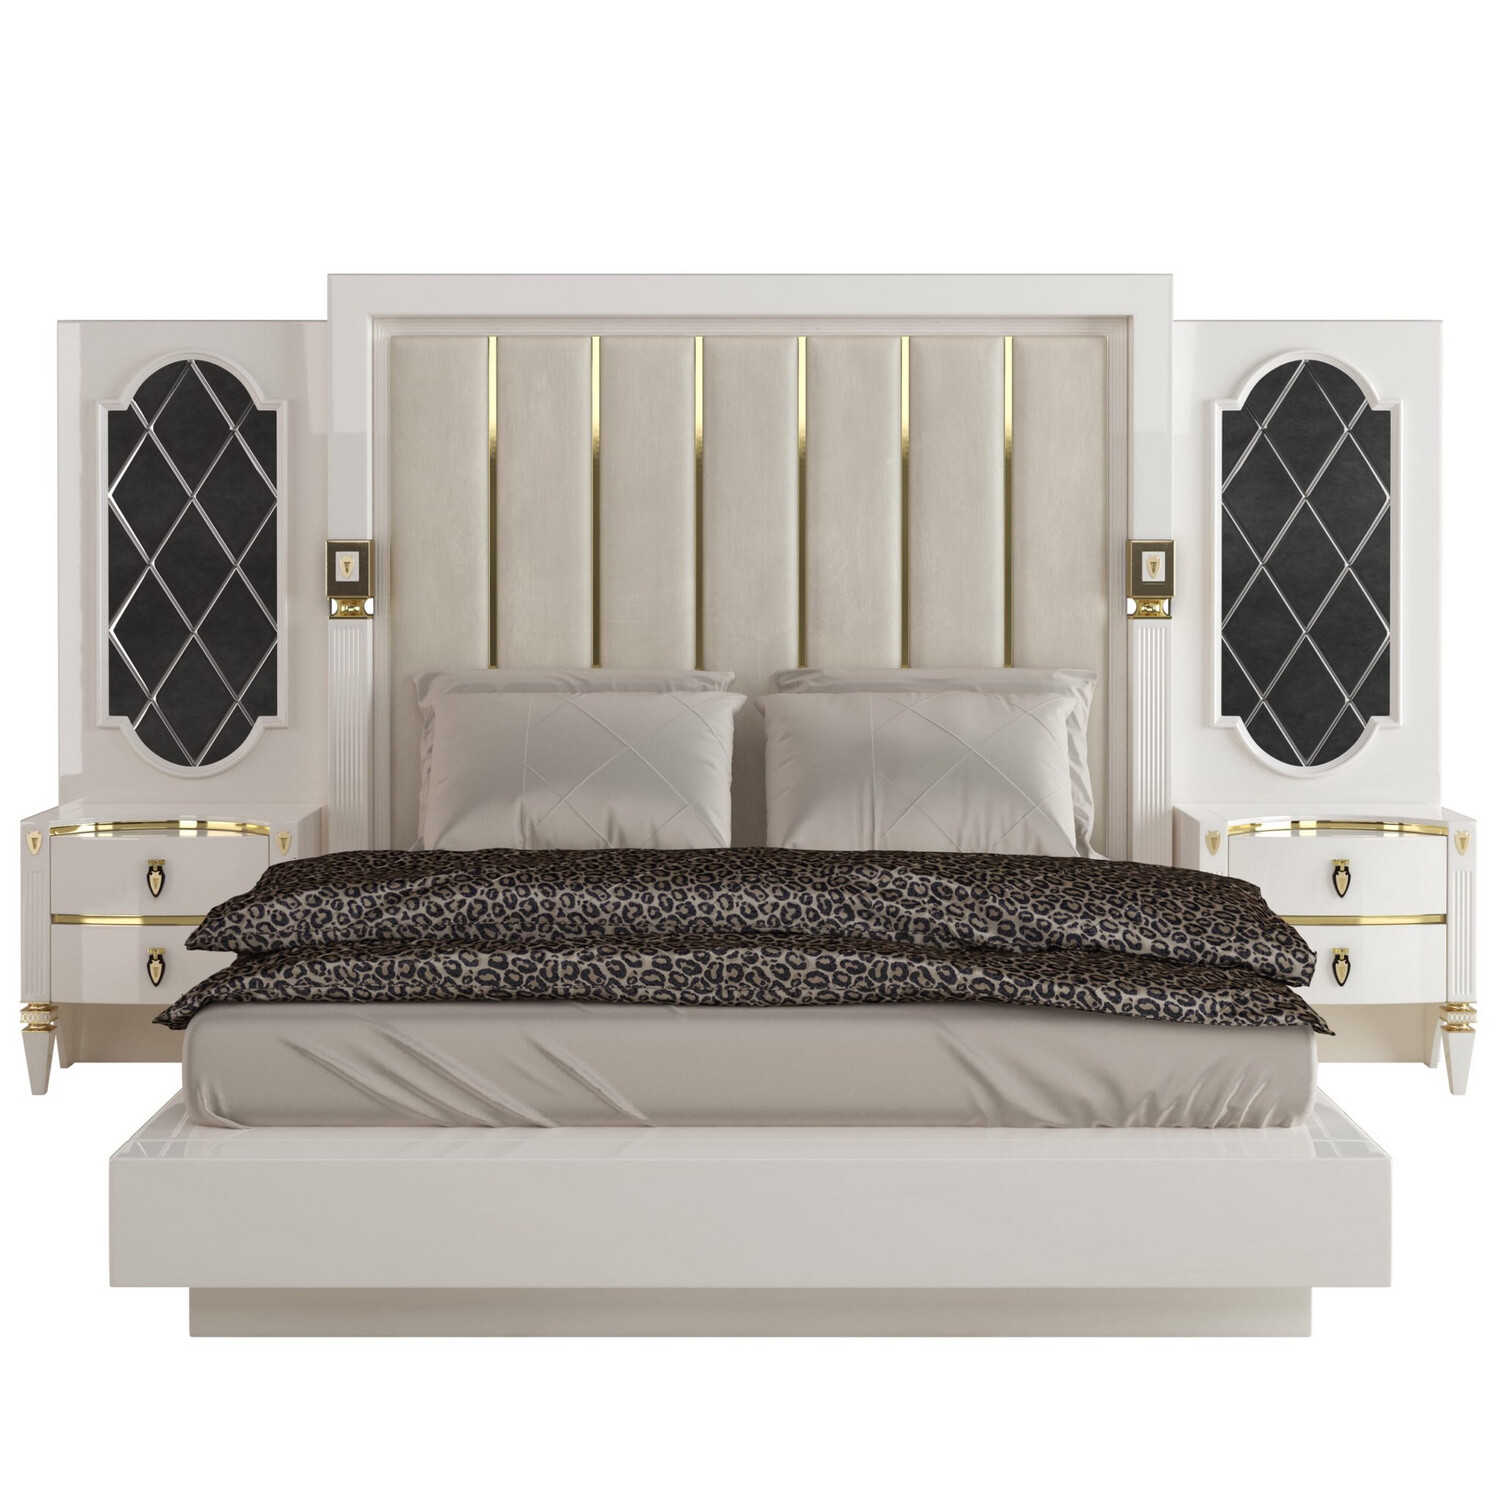 Premium Modern cream colored Bed Sets 